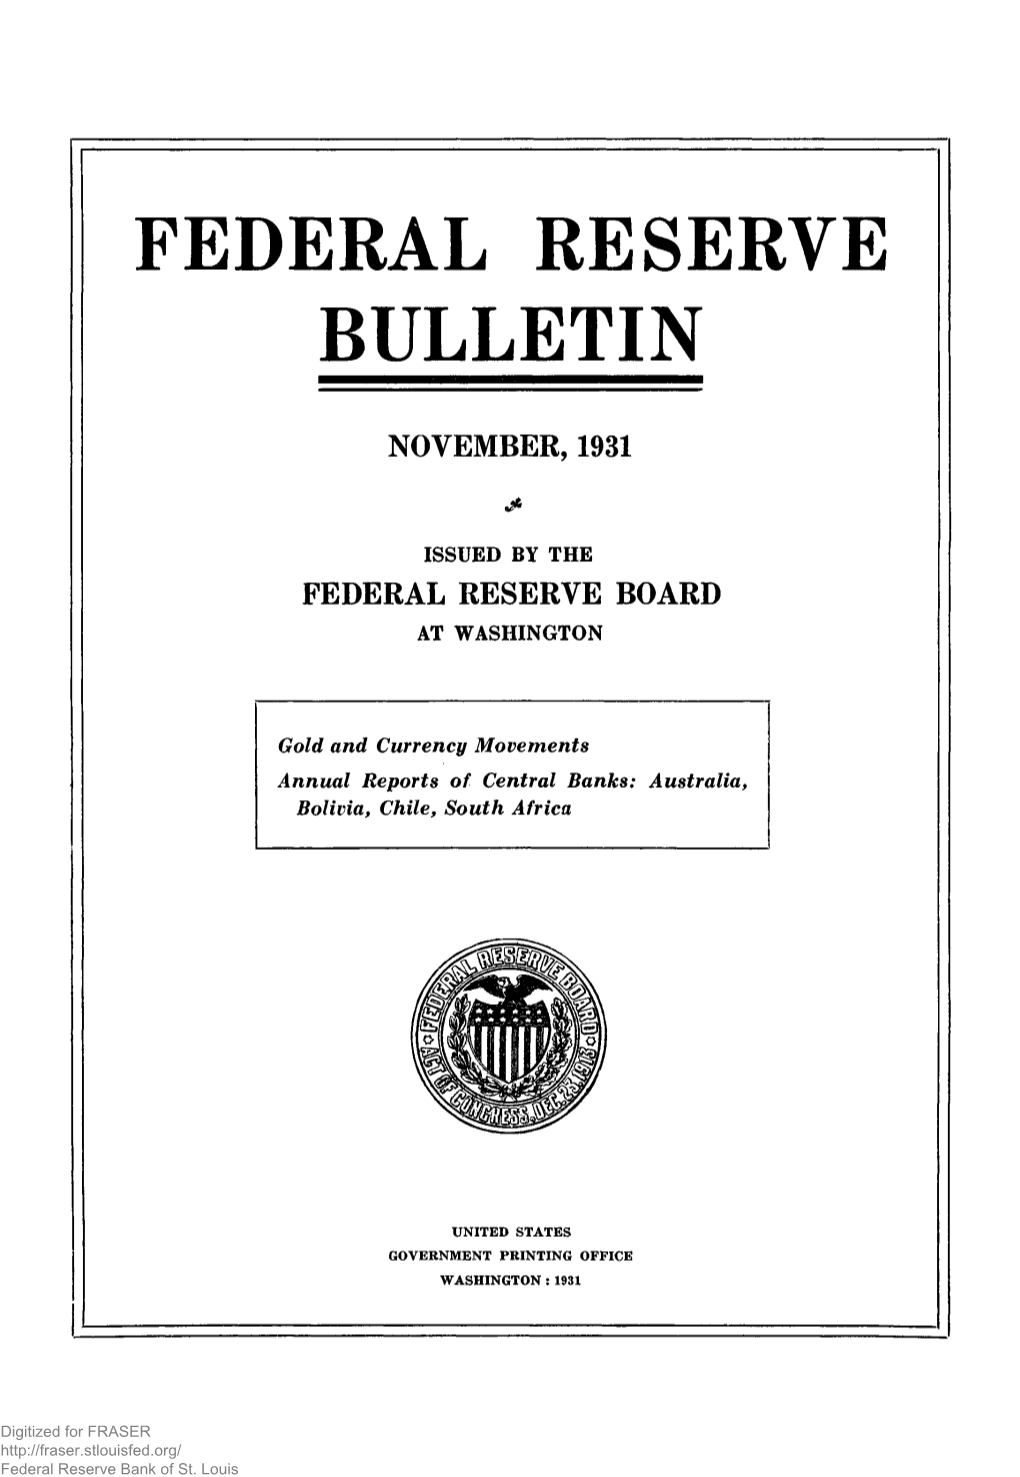 Federal Reserve Bulletin November 1931